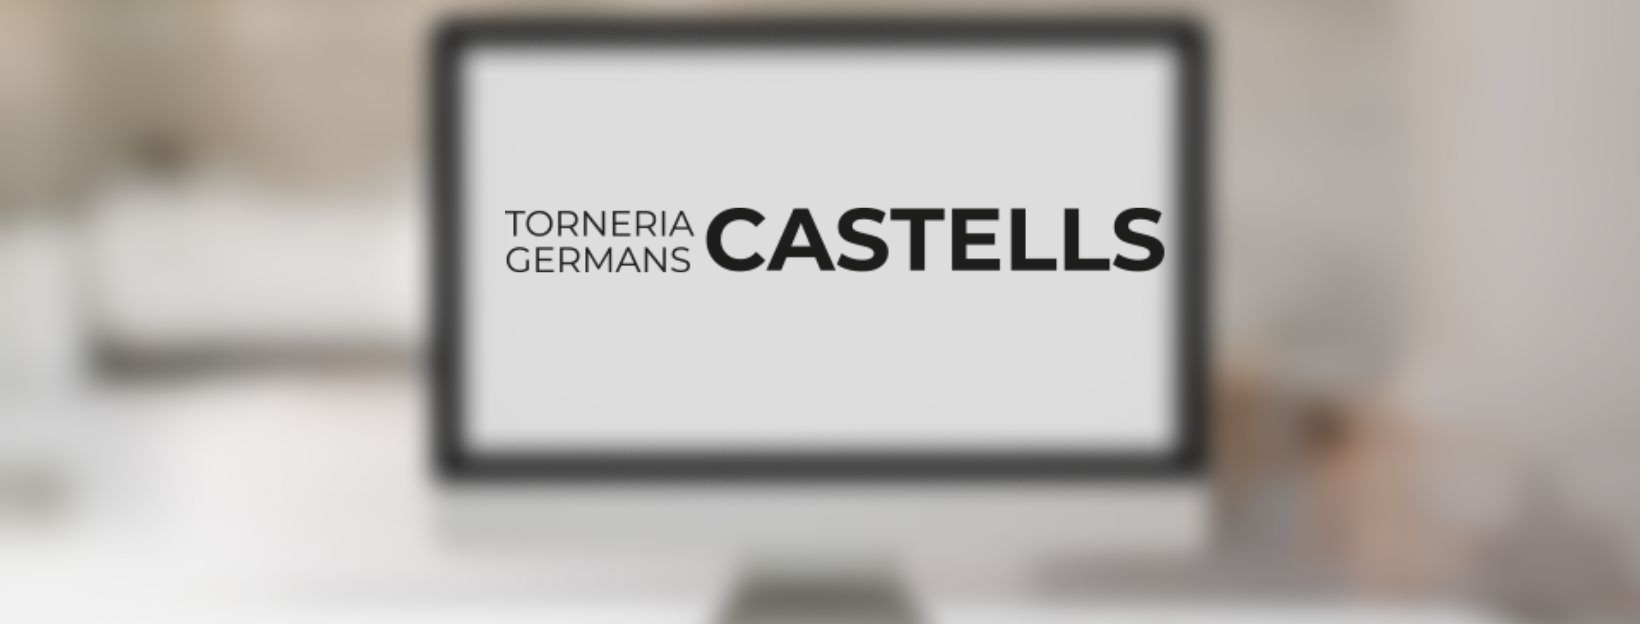 Tienda online para Torneria Castells